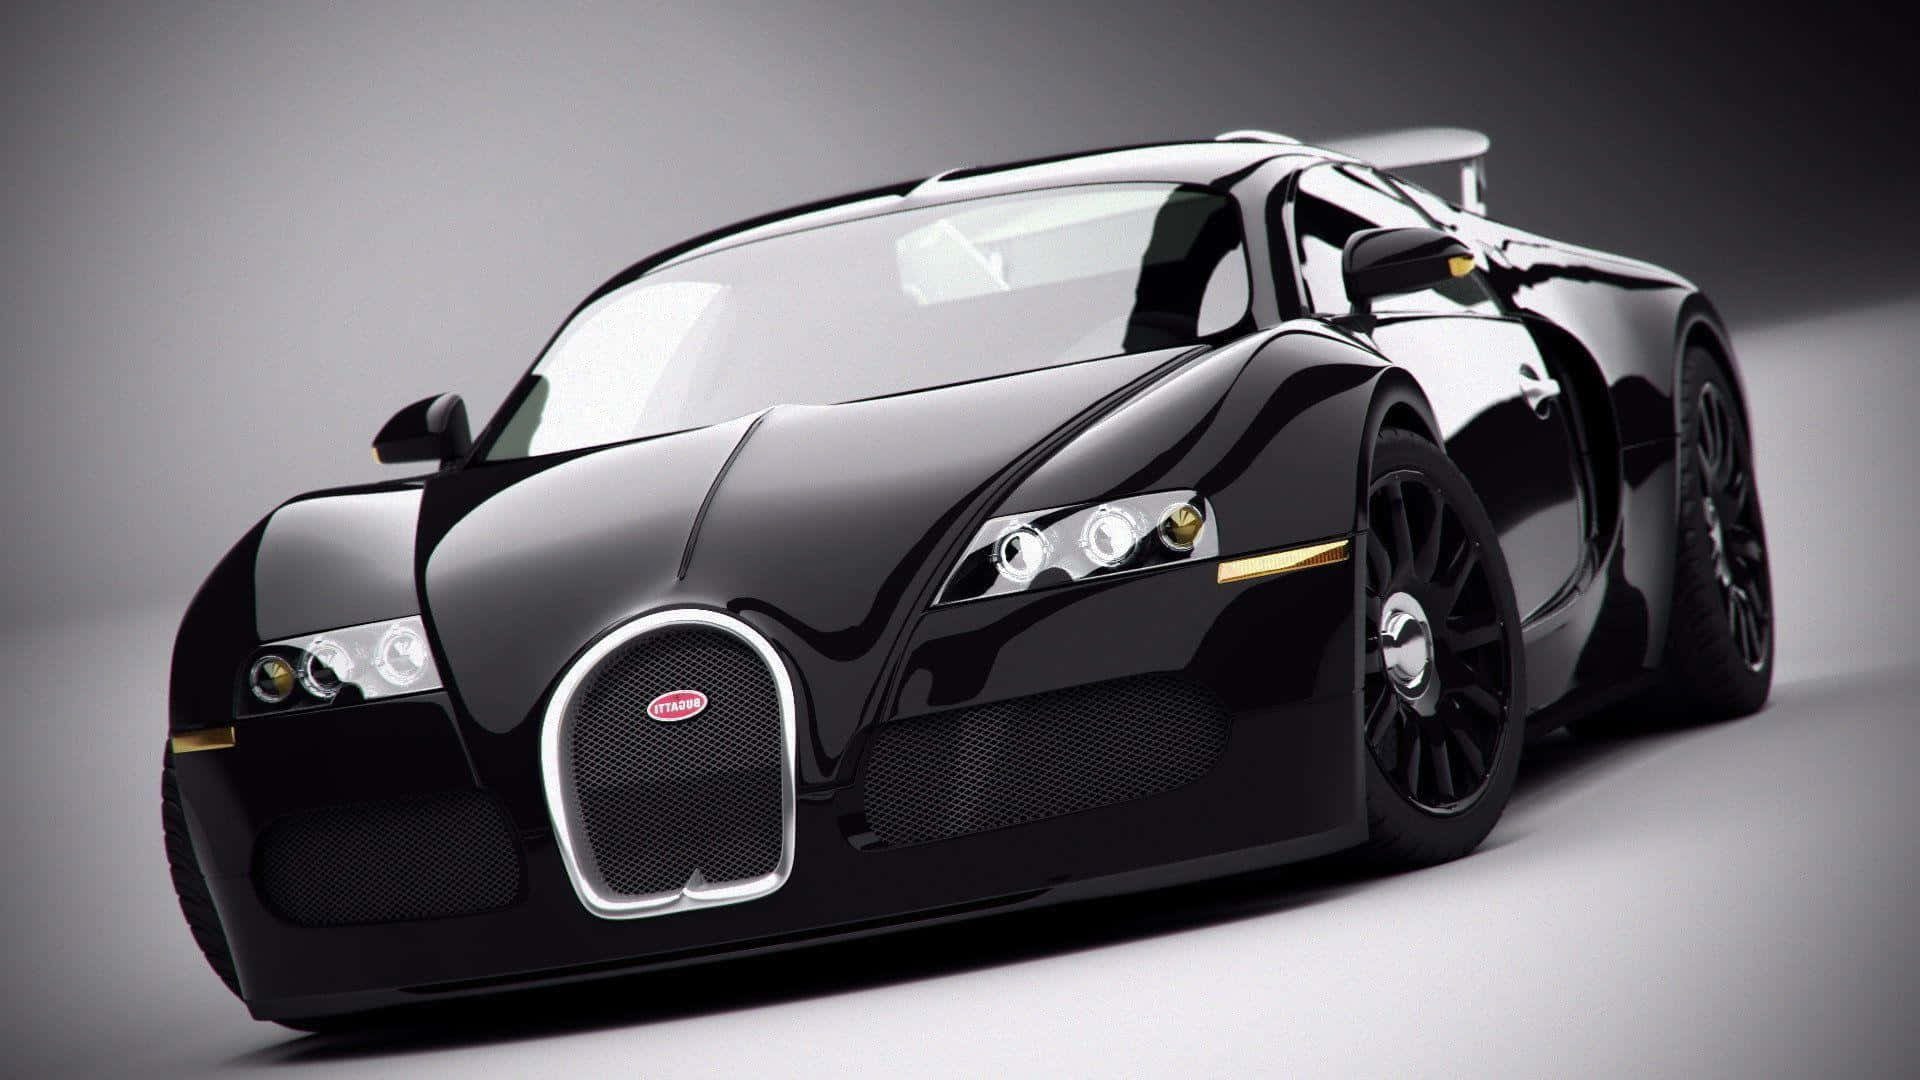 Hastighed og stil, den legendariske Bugatti wallpaper! Wallpaper